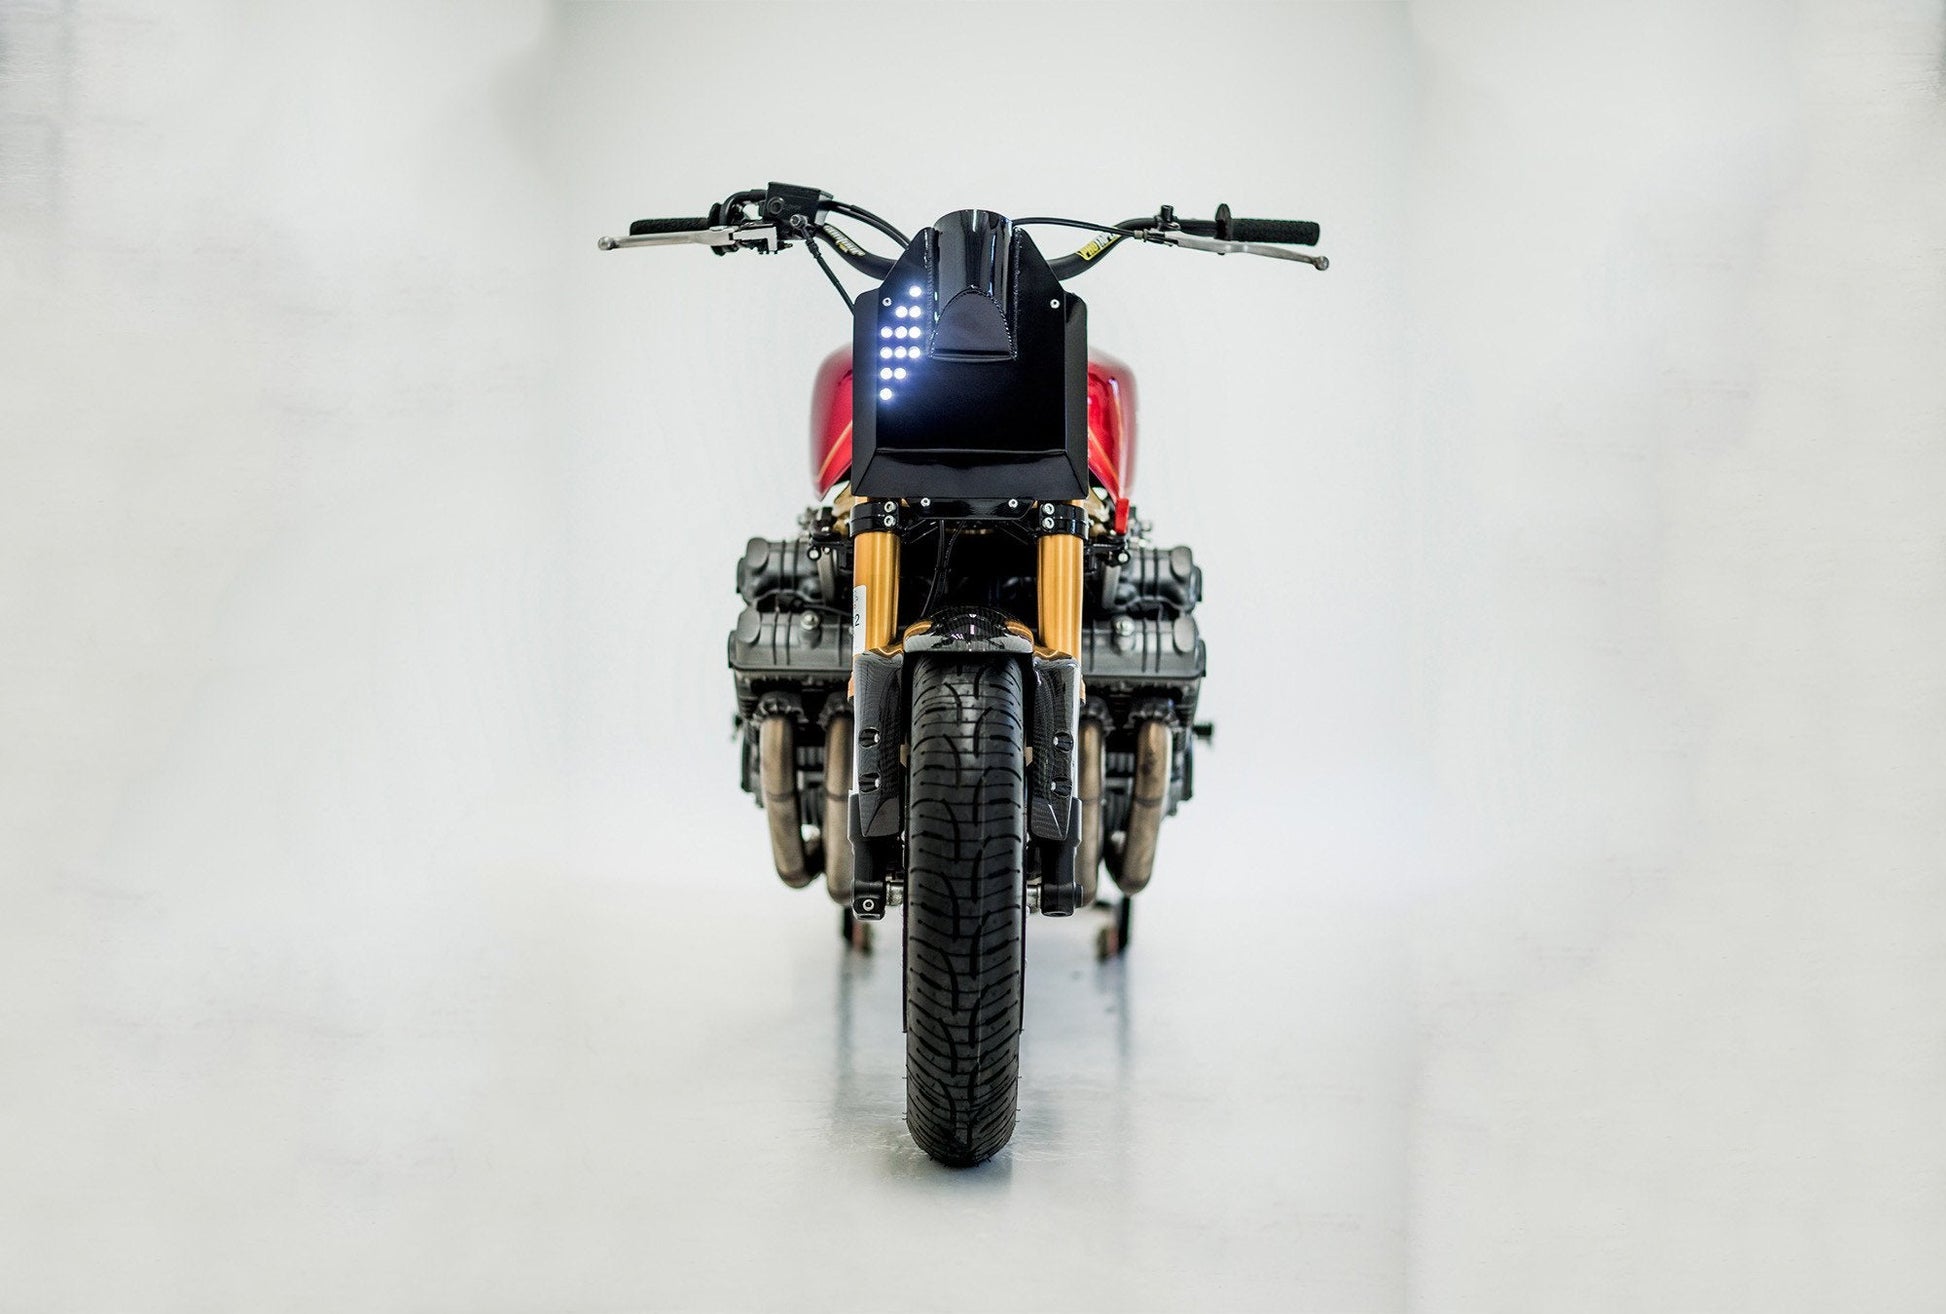 Honda CBX1050 Streetfighter #36 - TheArsenale